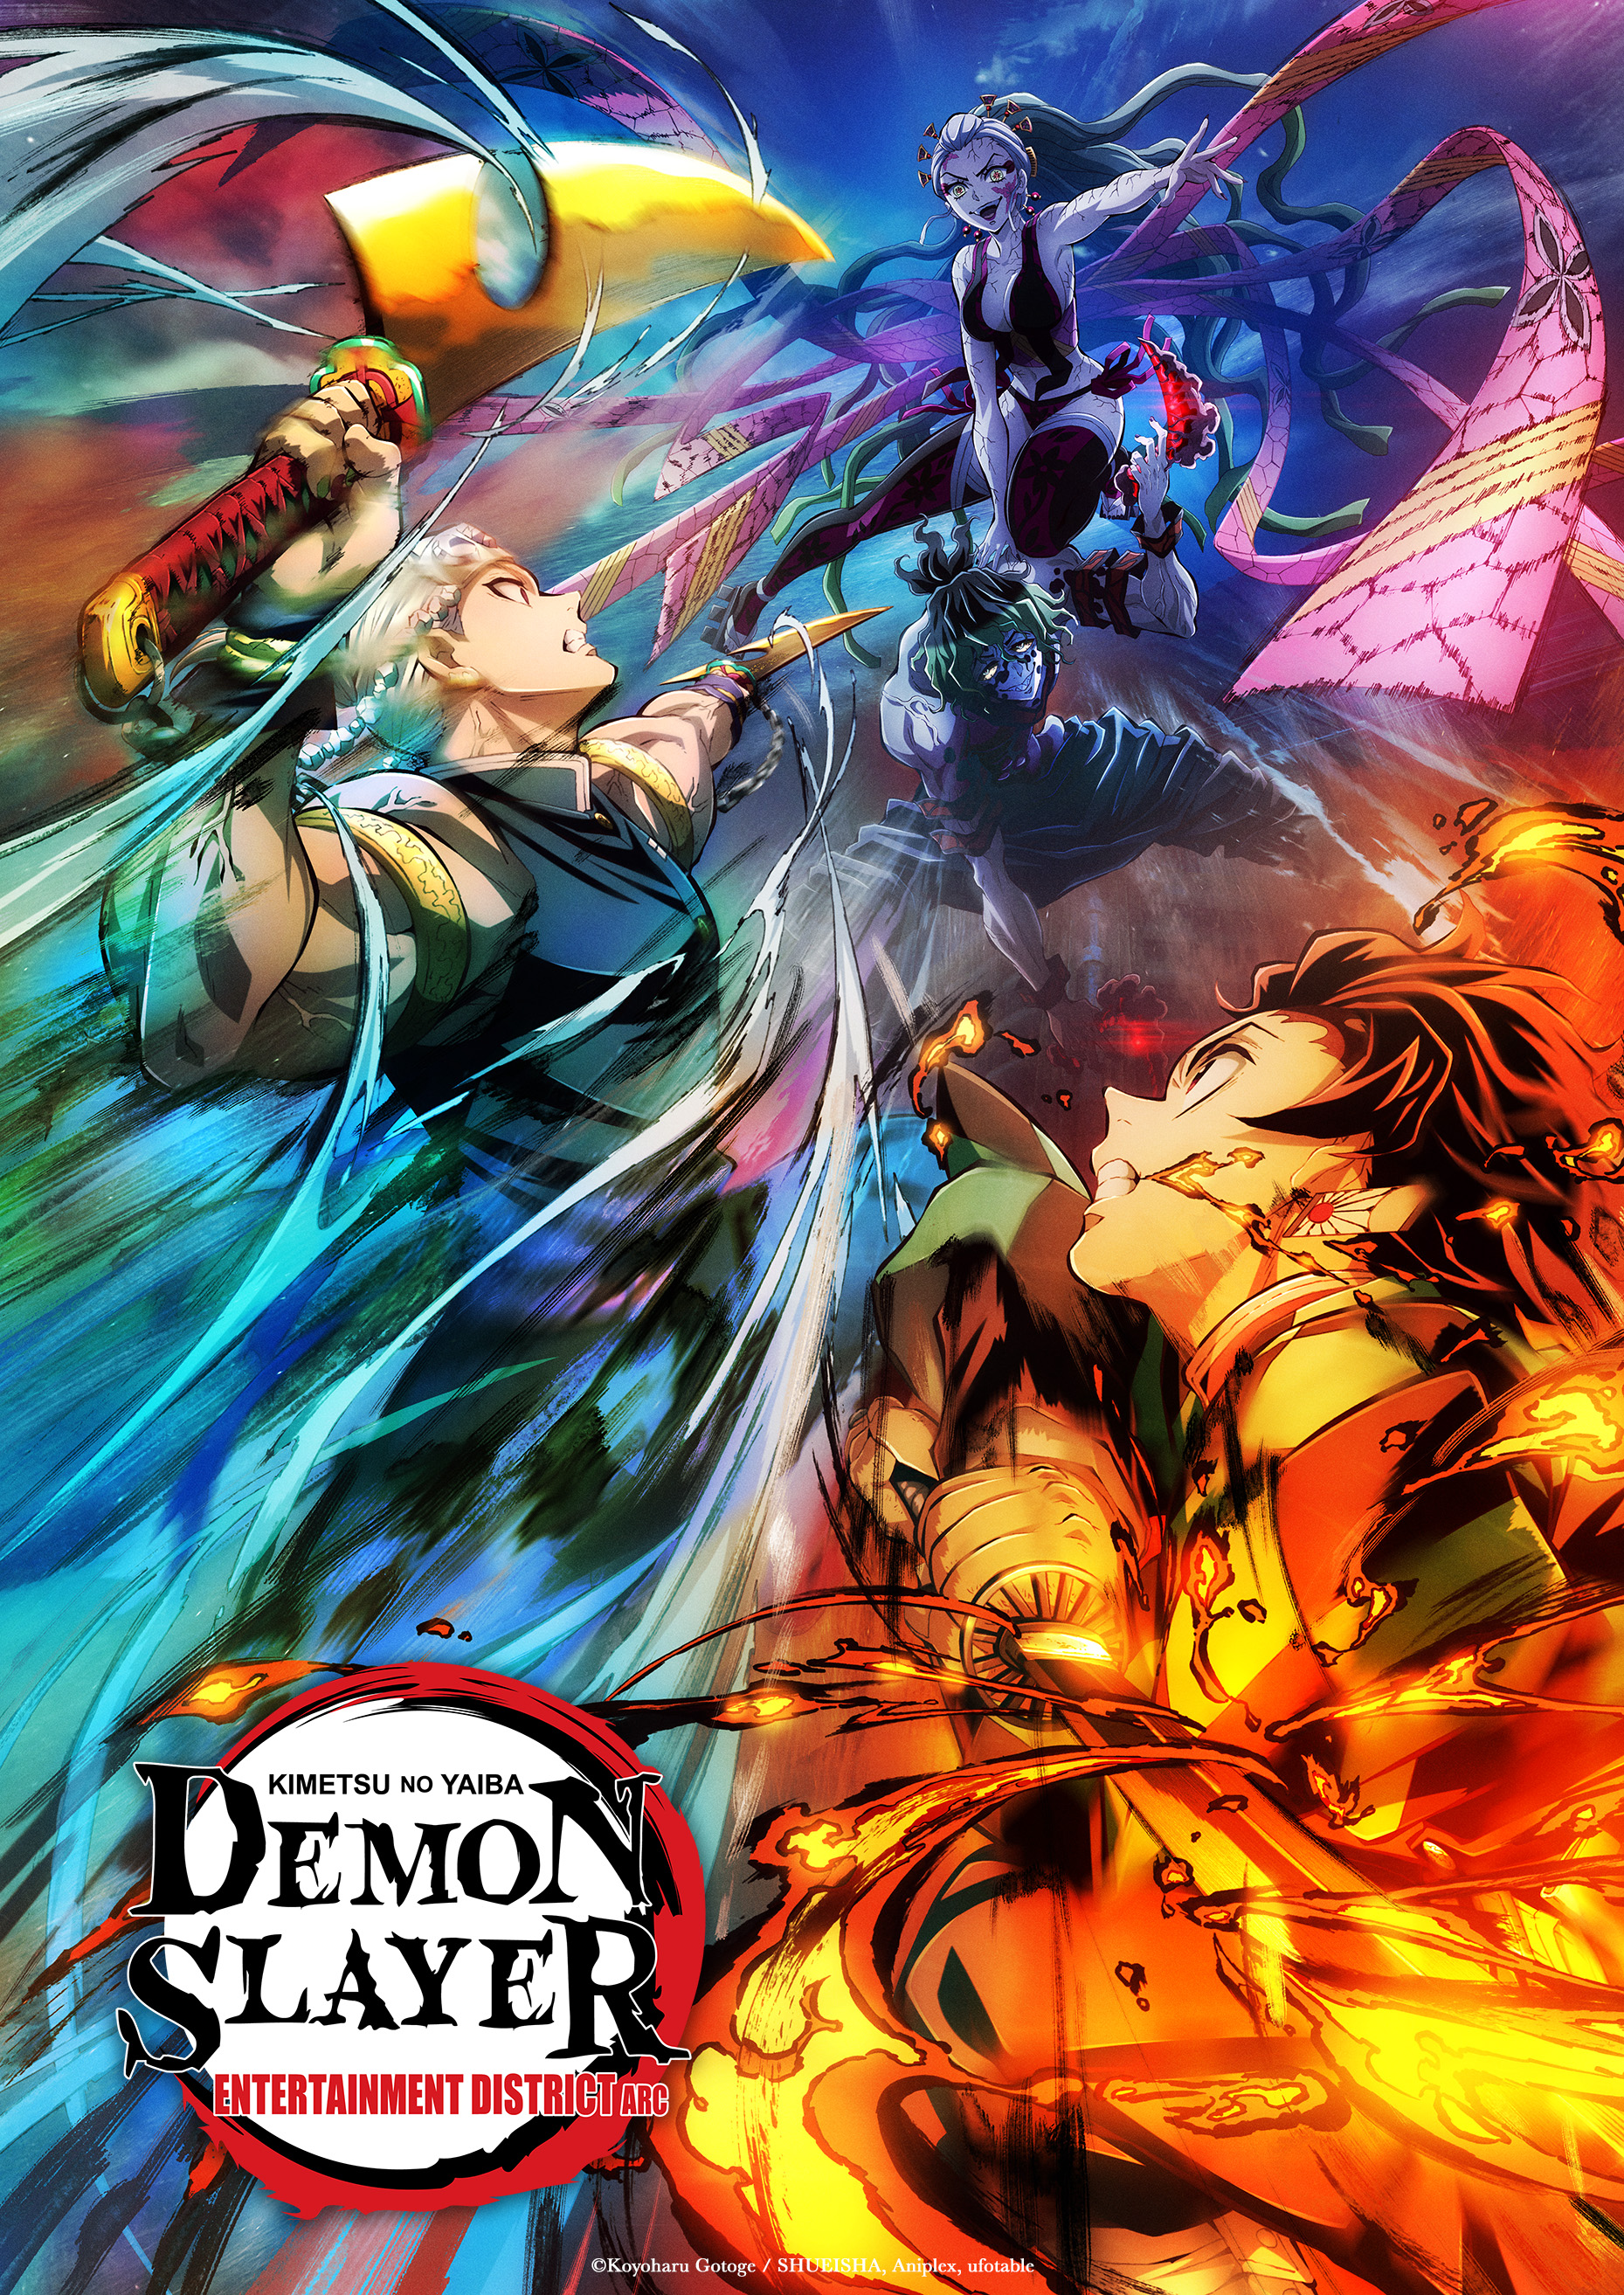 Crunchyroll - Demon Slayer: Kimetsu no Yaiba Entertainment District Arc English  Dub Gets Flashy on Crunchyroll This Sunday